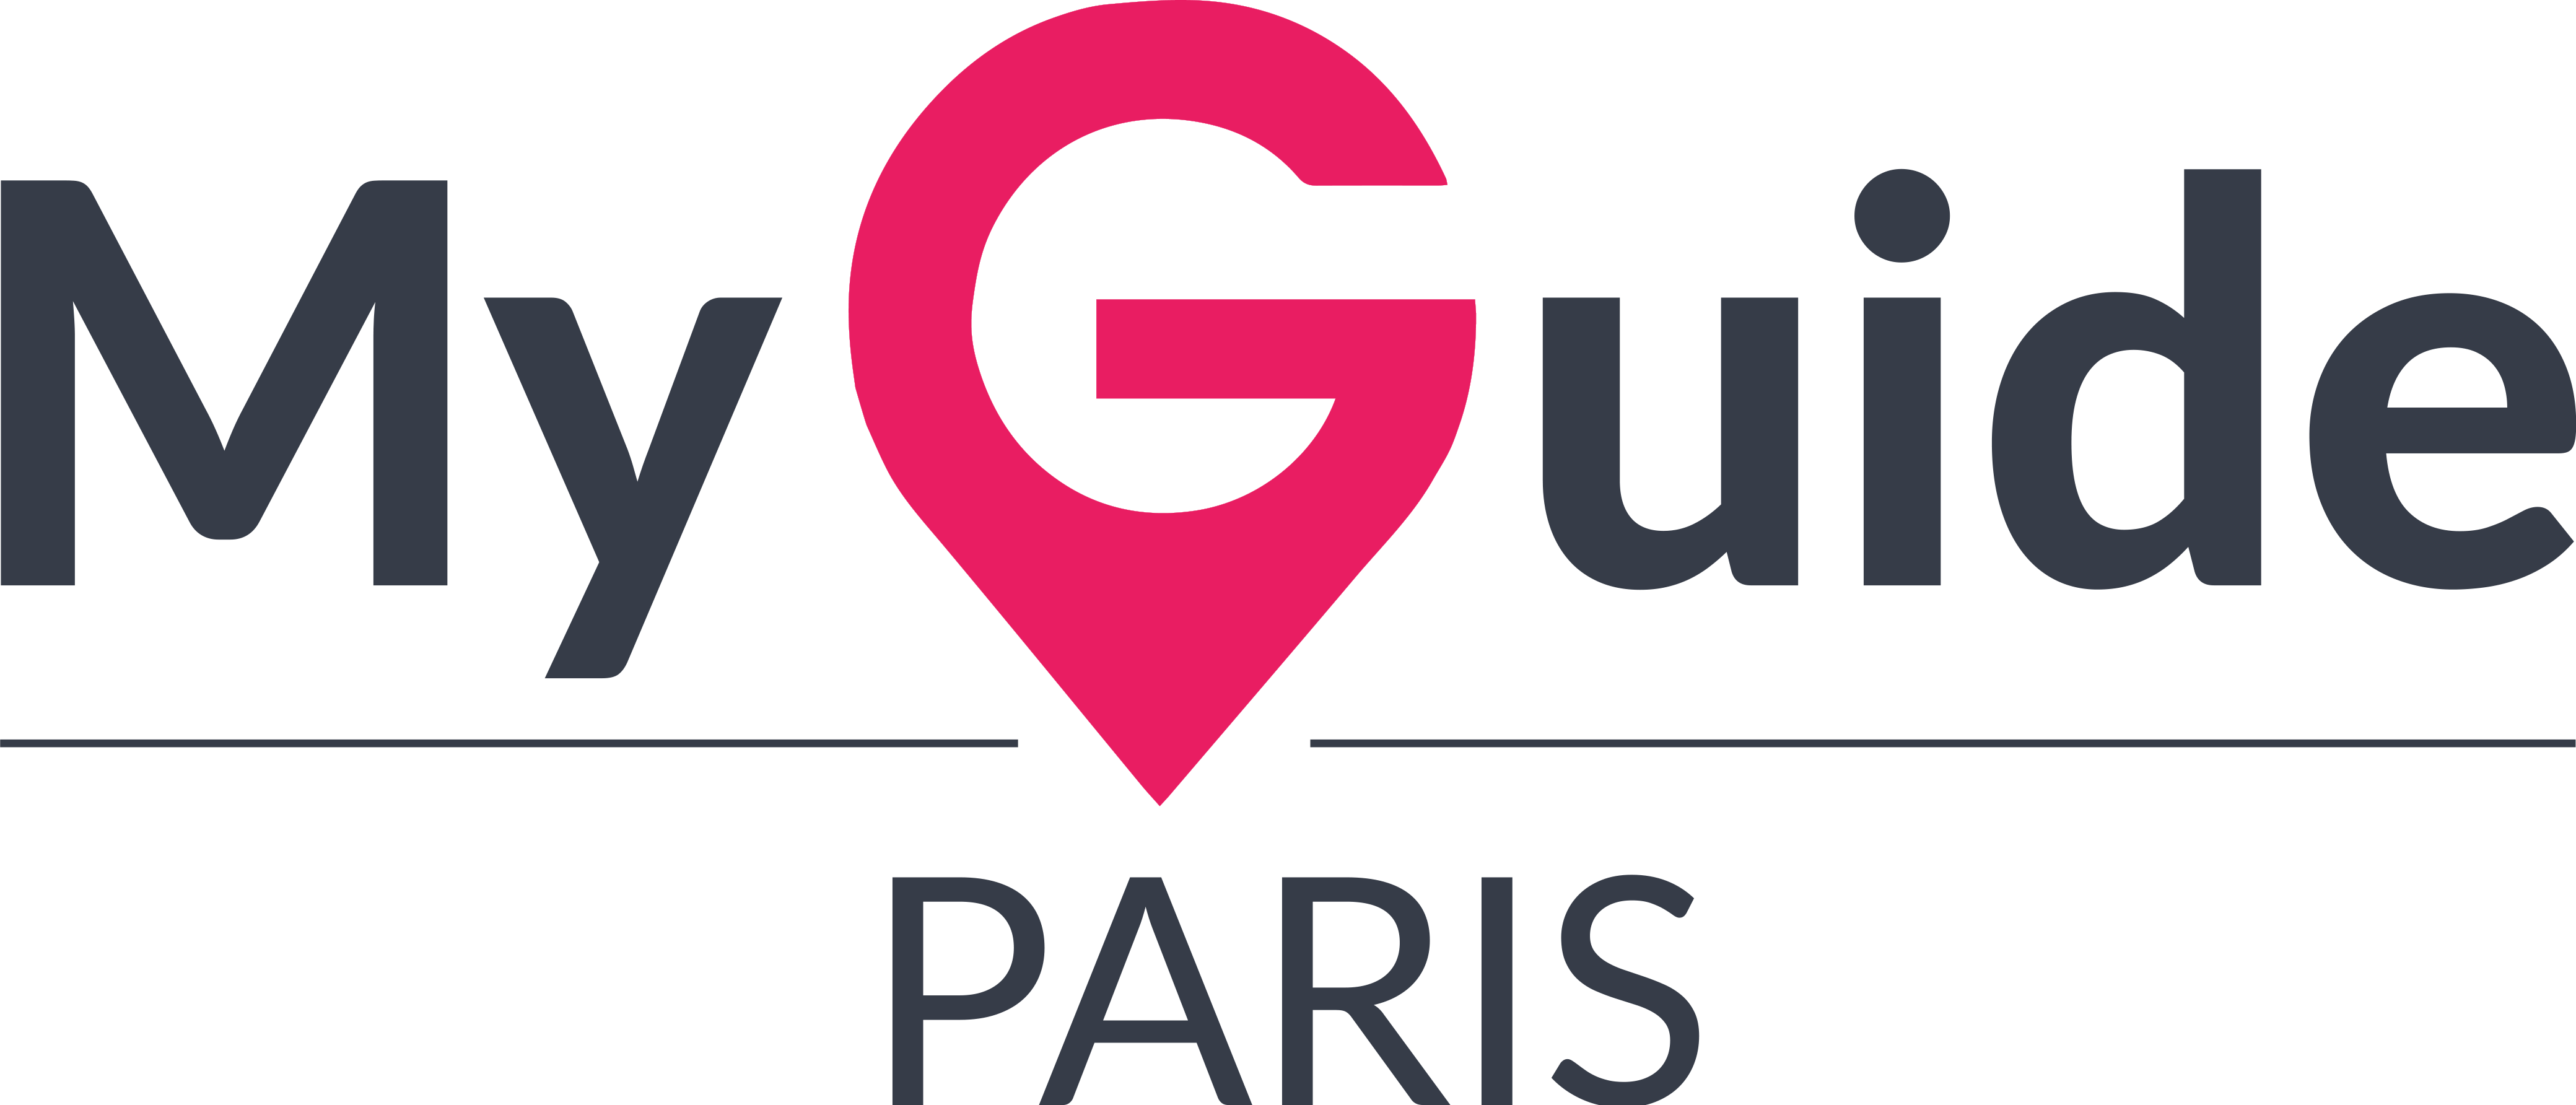 My Guide Paris